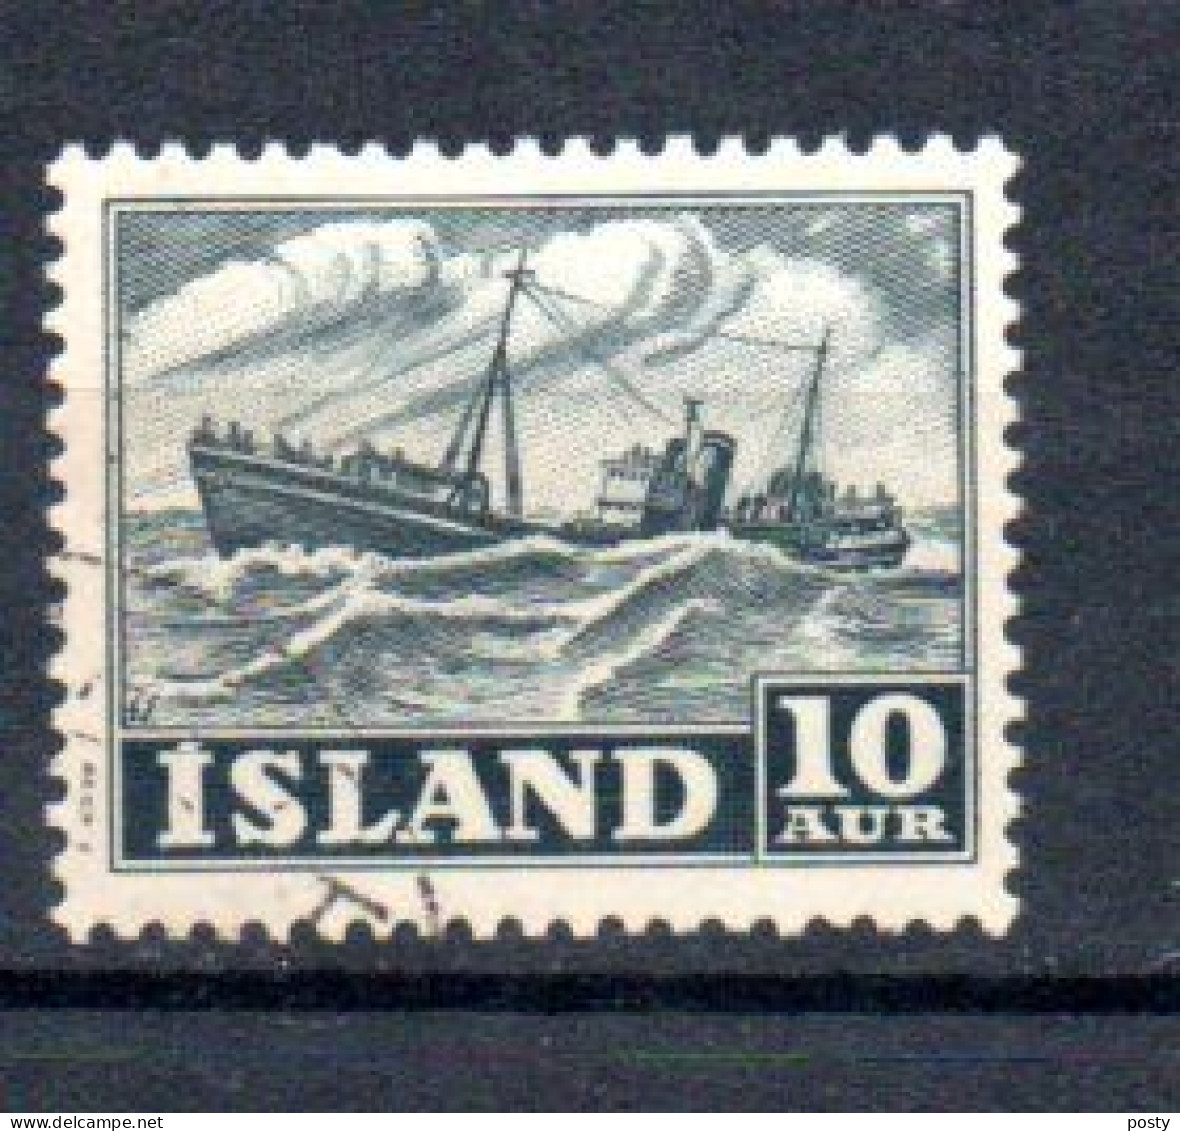 ISLANDE - ICELAND - 1950 - BATEAU DE PECHE - FISHING BOAT - Obli - Used - 10 AUR - - Used Stamps